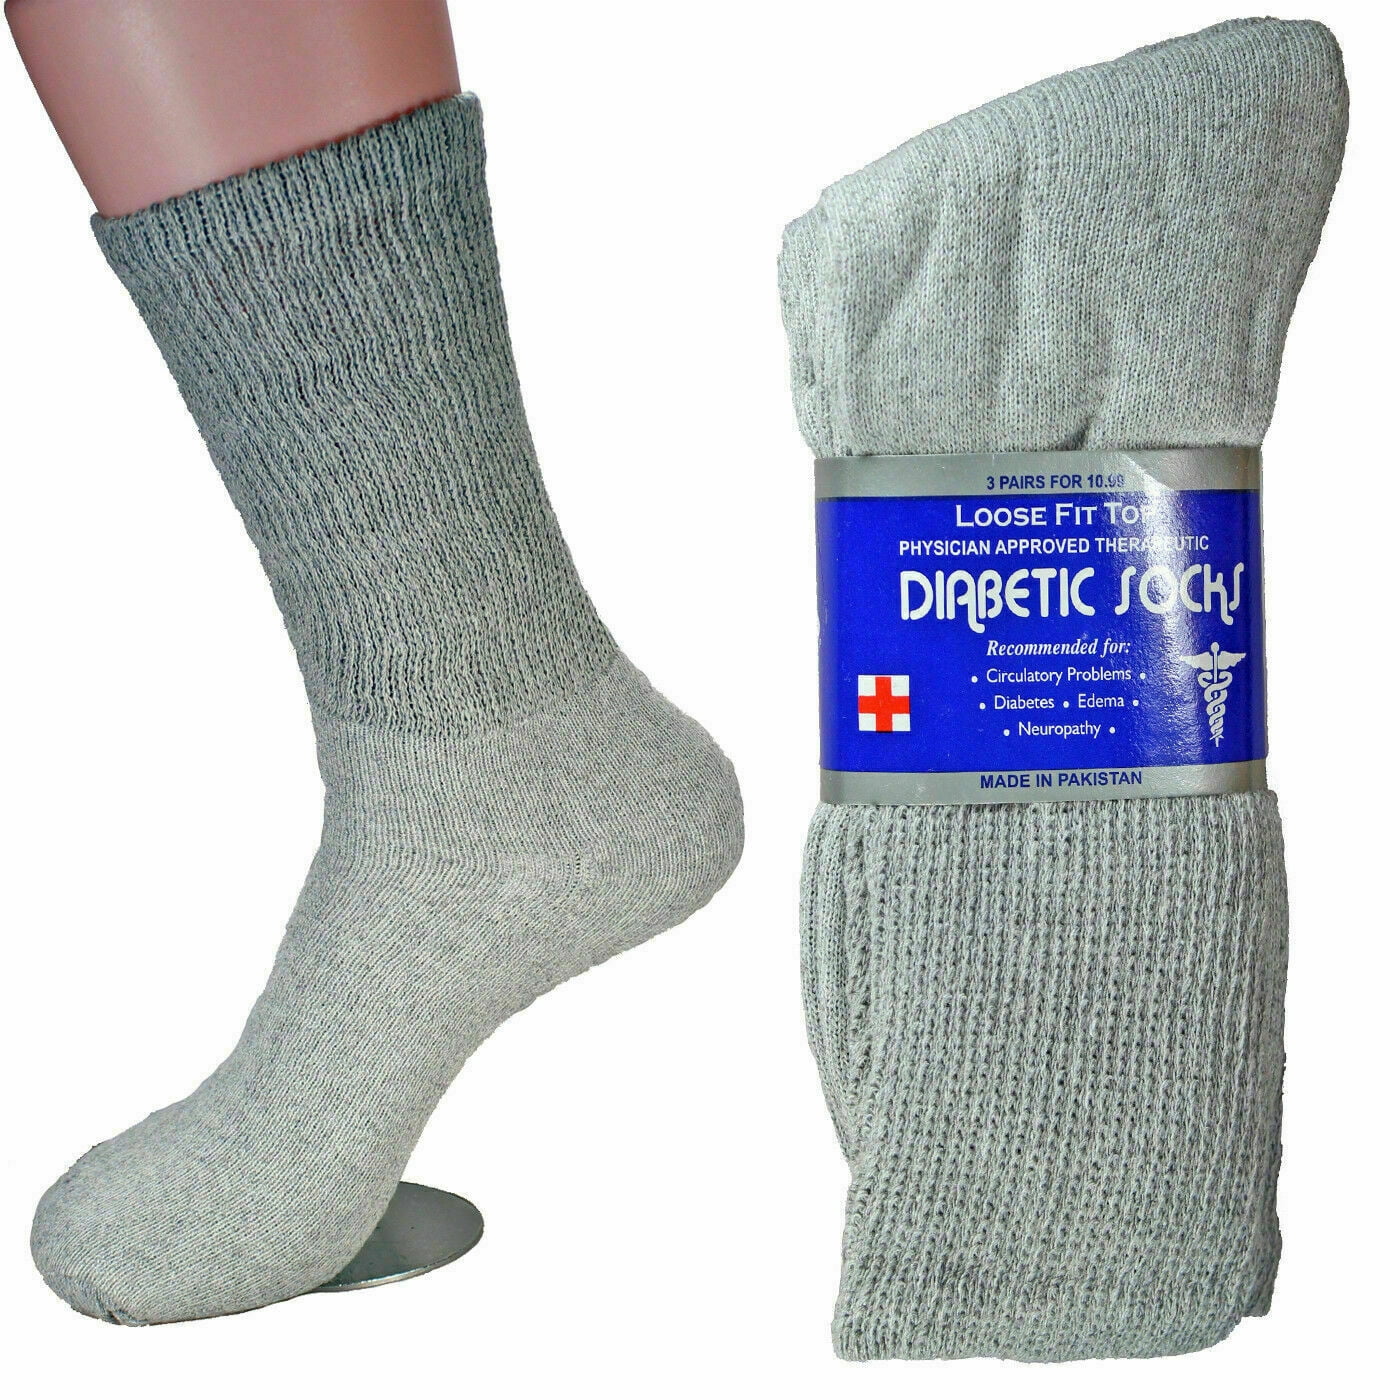 New Diabetic Crew Socks Circulatory Health Cotton Loose Fit Top 3 Pairs